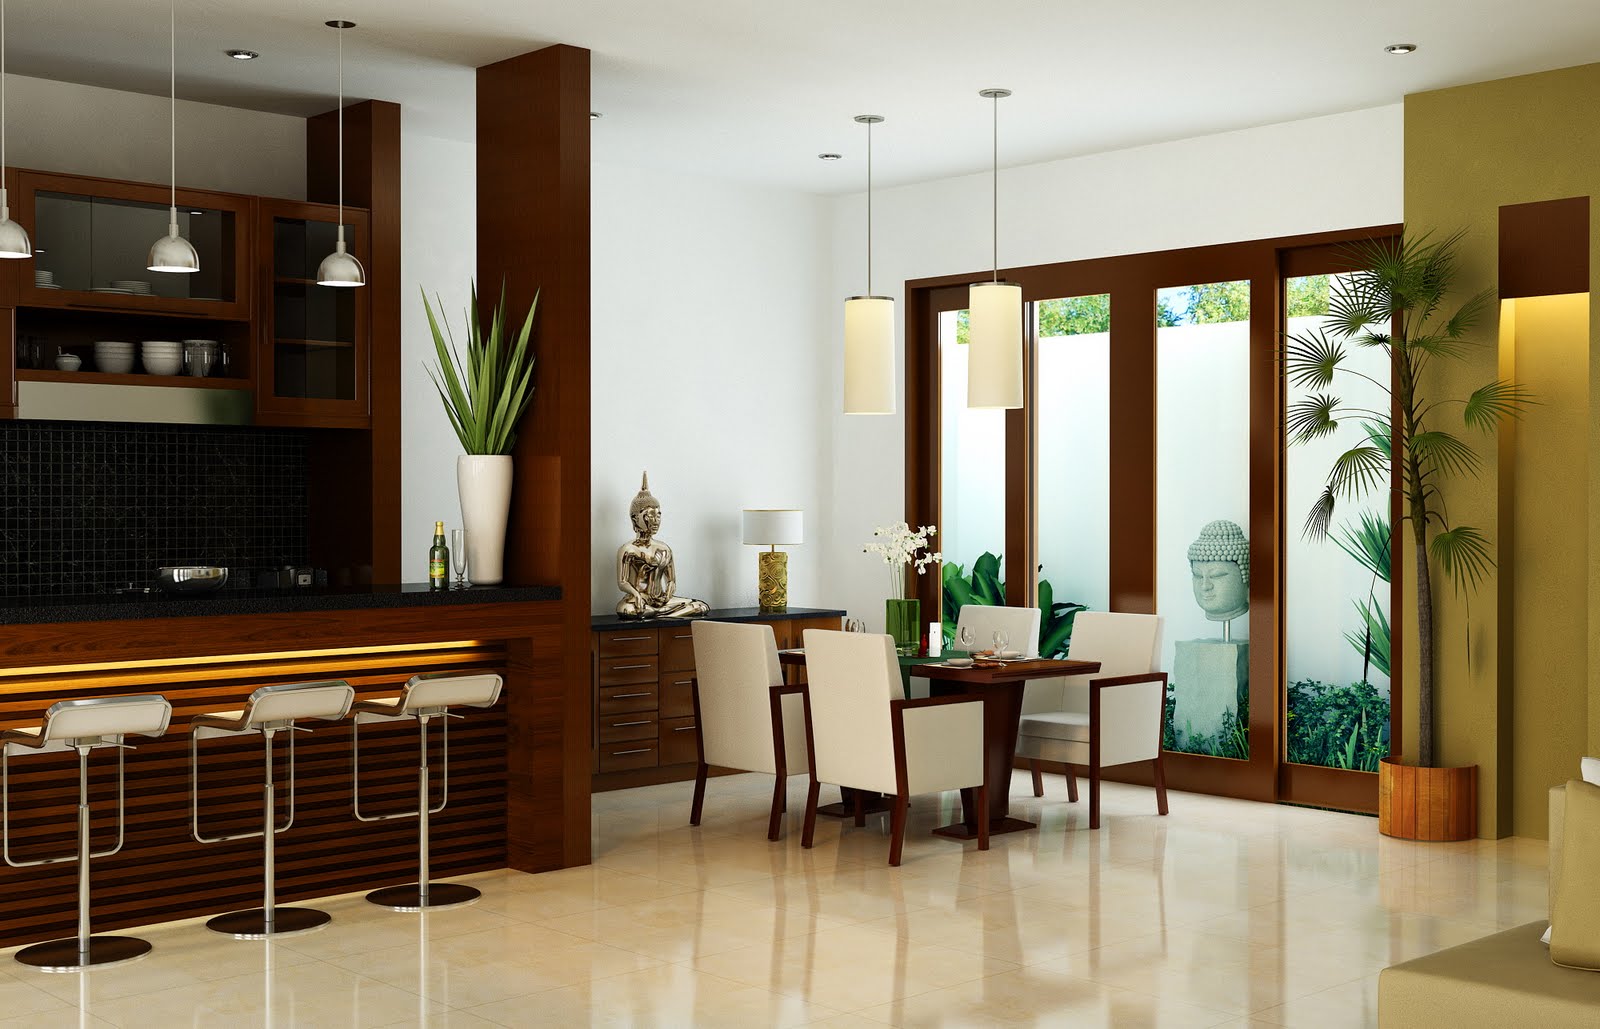 Kumpulan Desain Interior Rumah Jawa Minimalis Kumpulan Desain Rumah